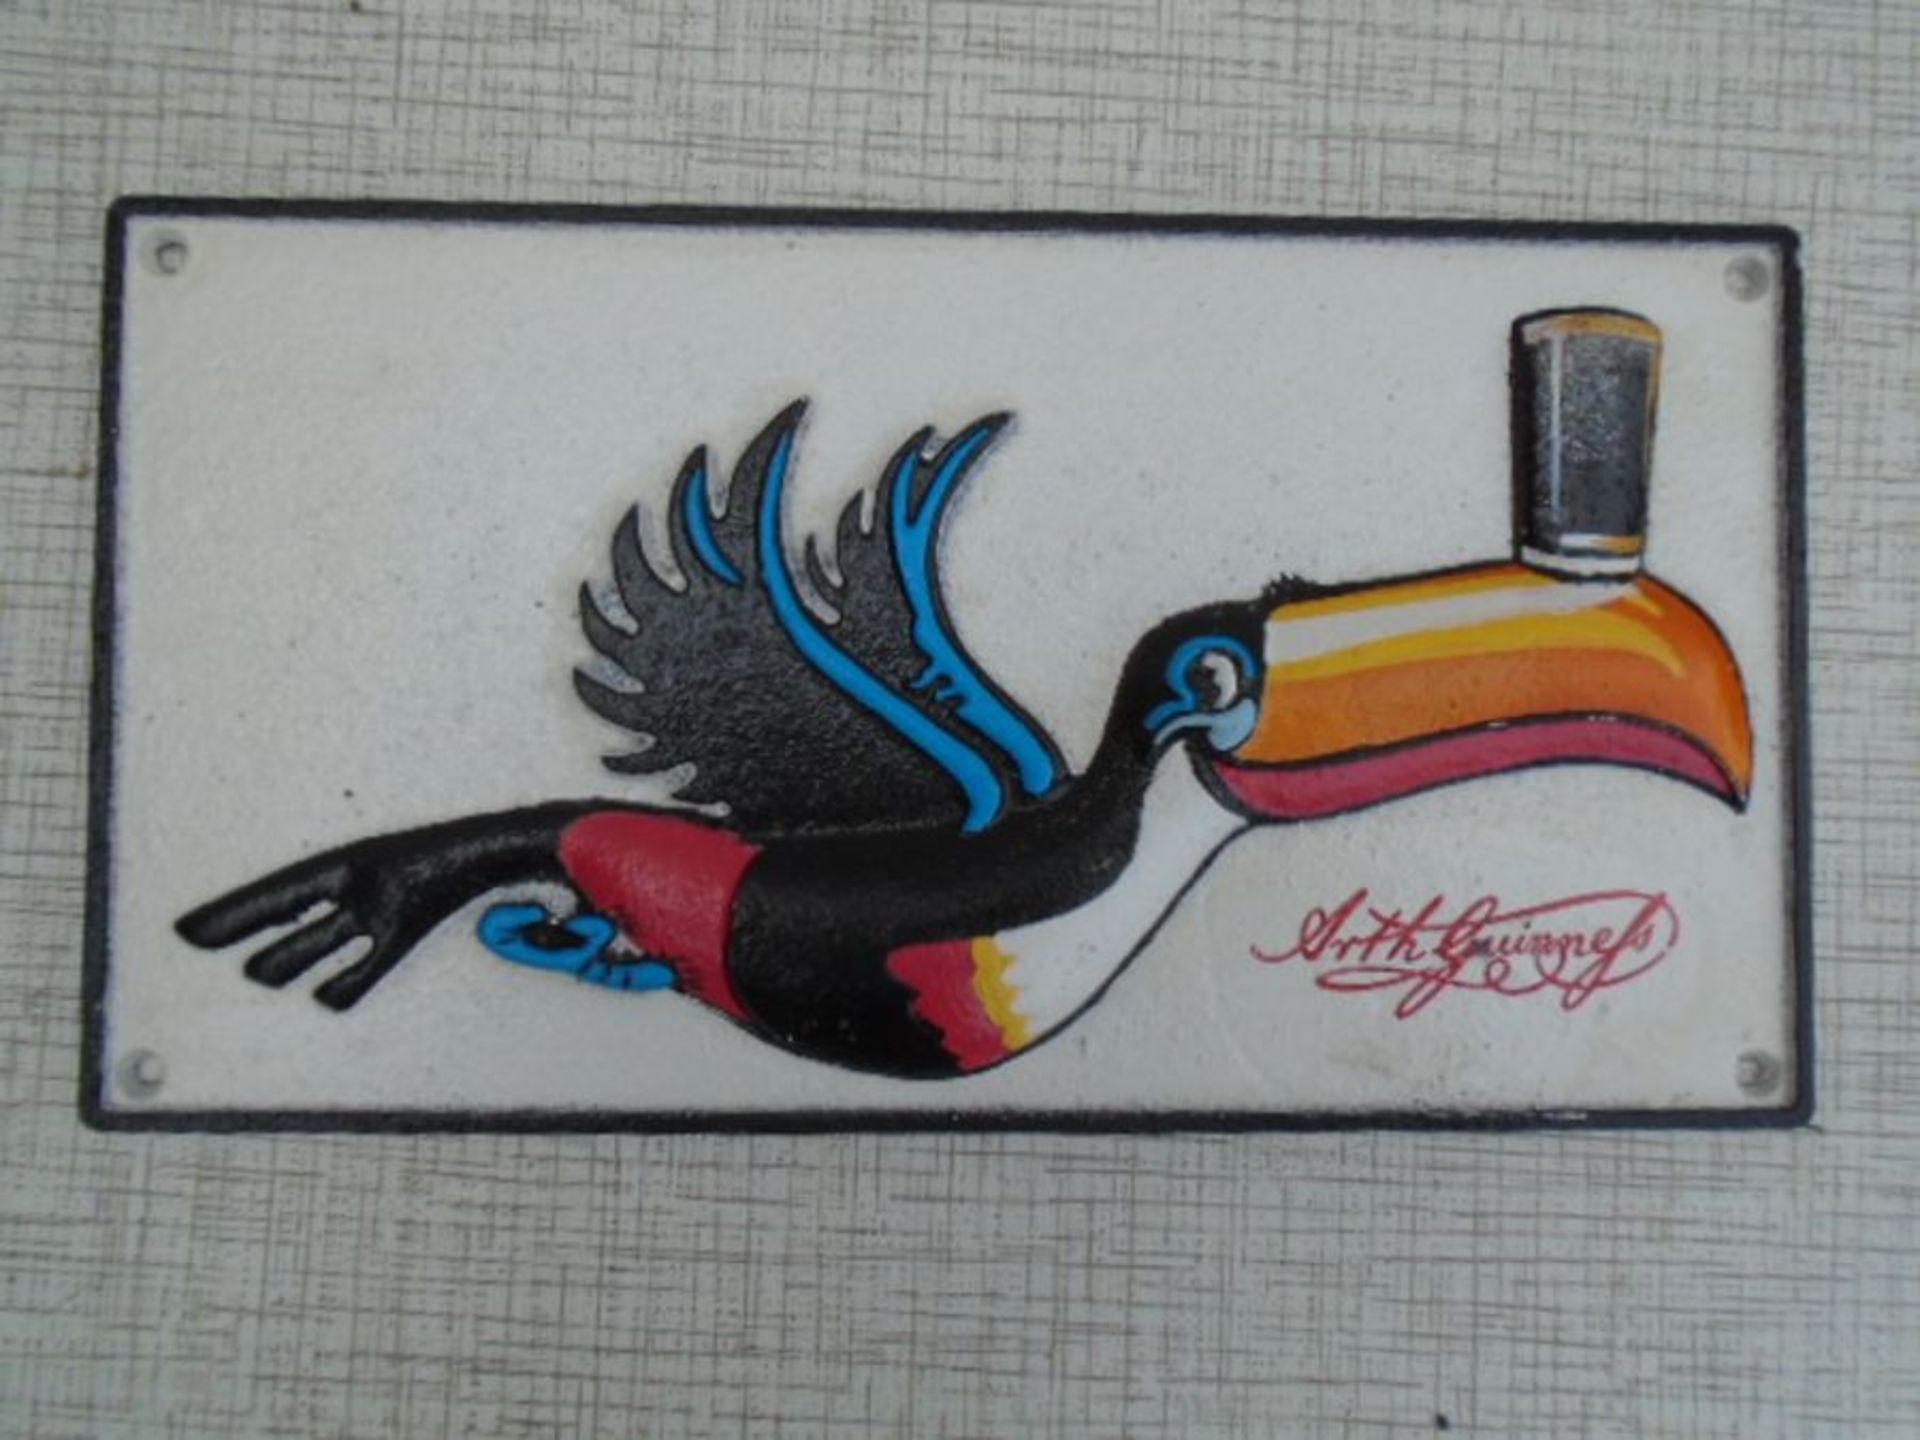 Flying toucan plaque